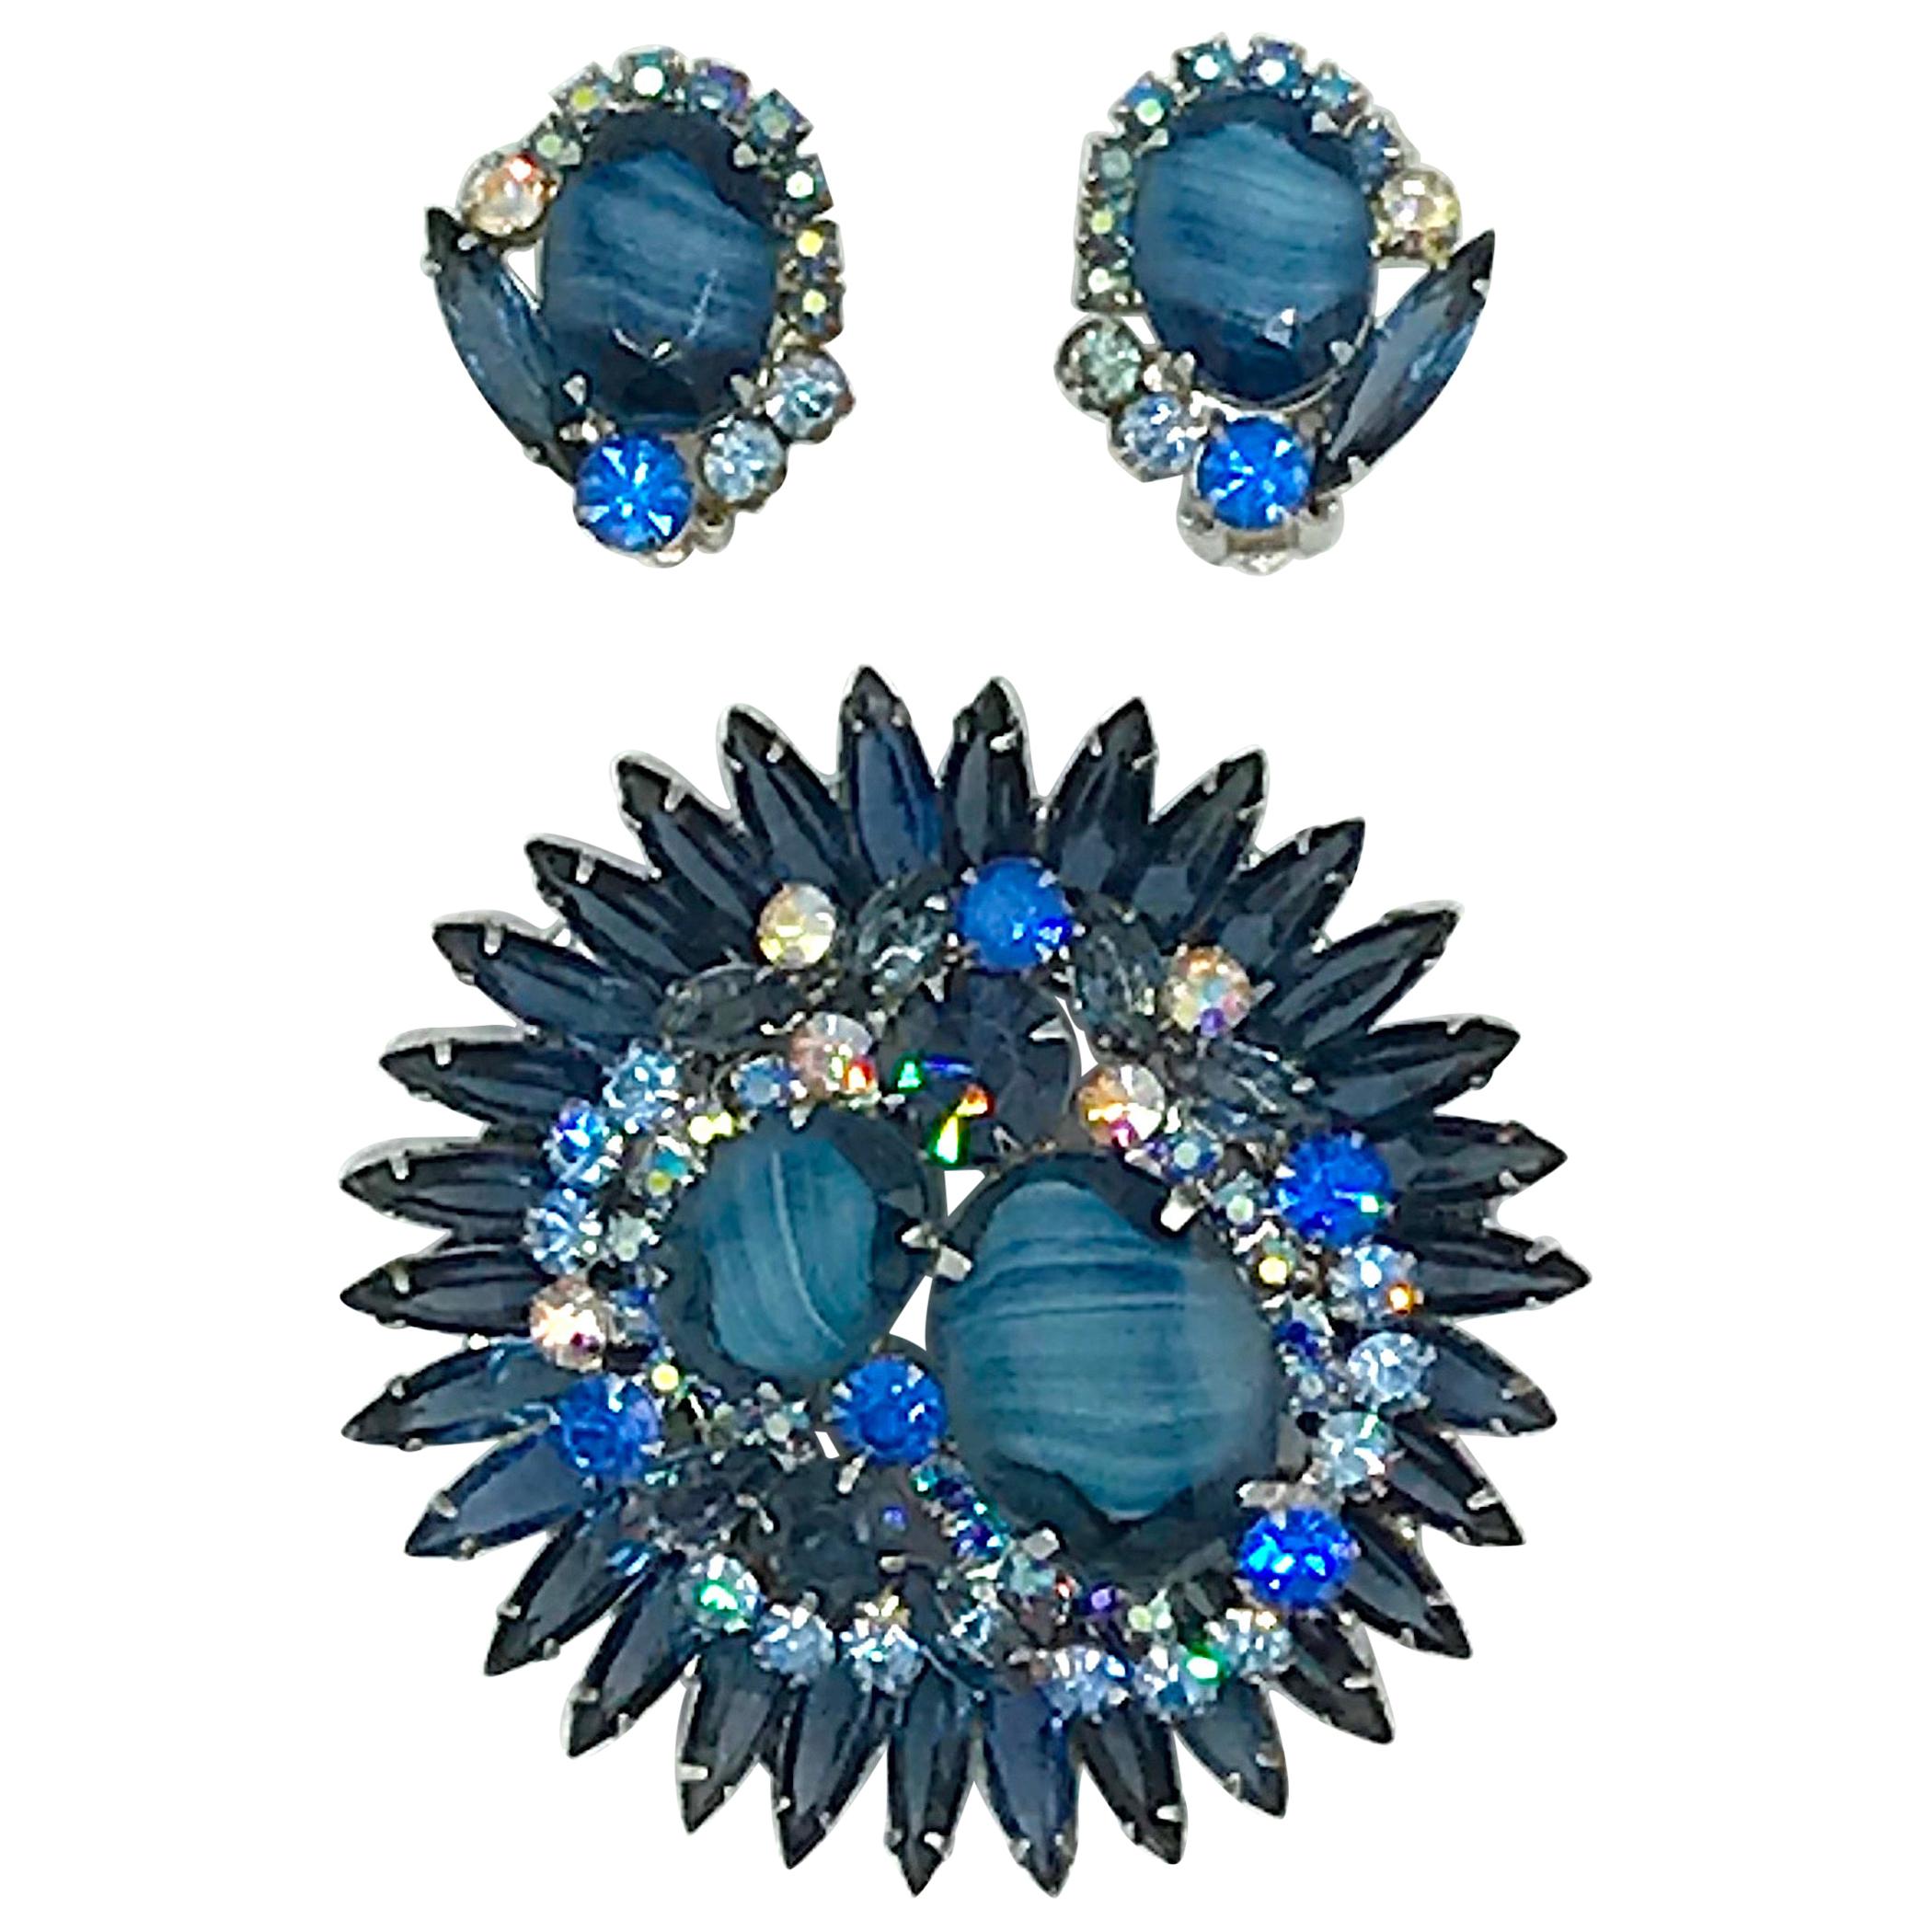 Details about   Vintage Floral Shape Rhinestone Brooch Pin Cobalt Powder Blue Prong Set Stones 